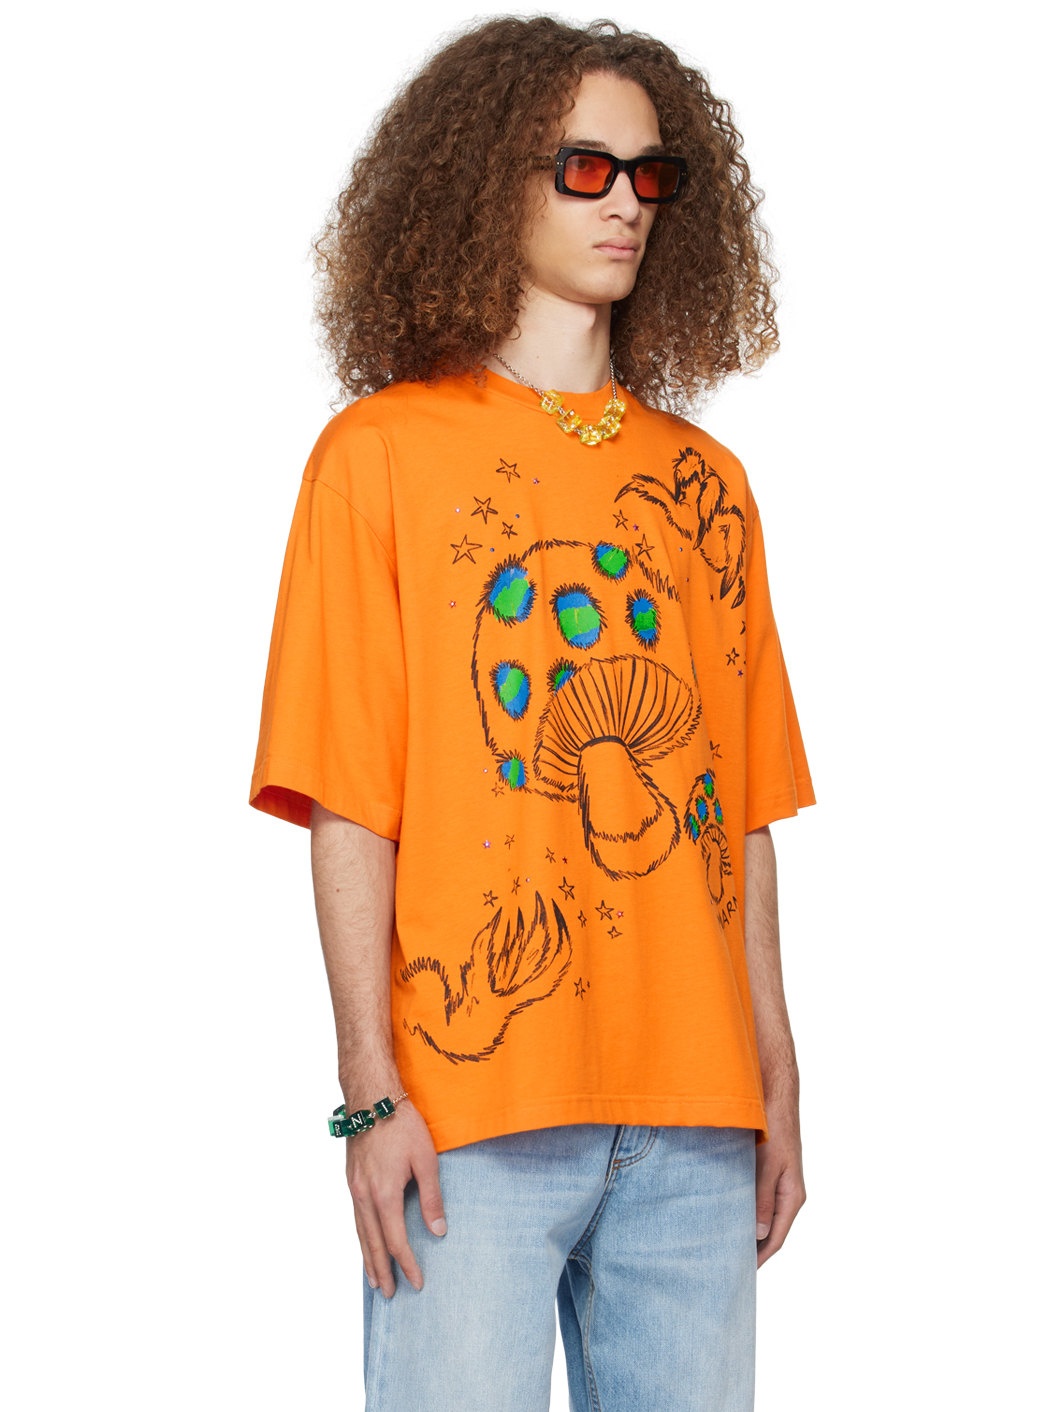 SSENSE Exclusive Orange T-Shirt - 2